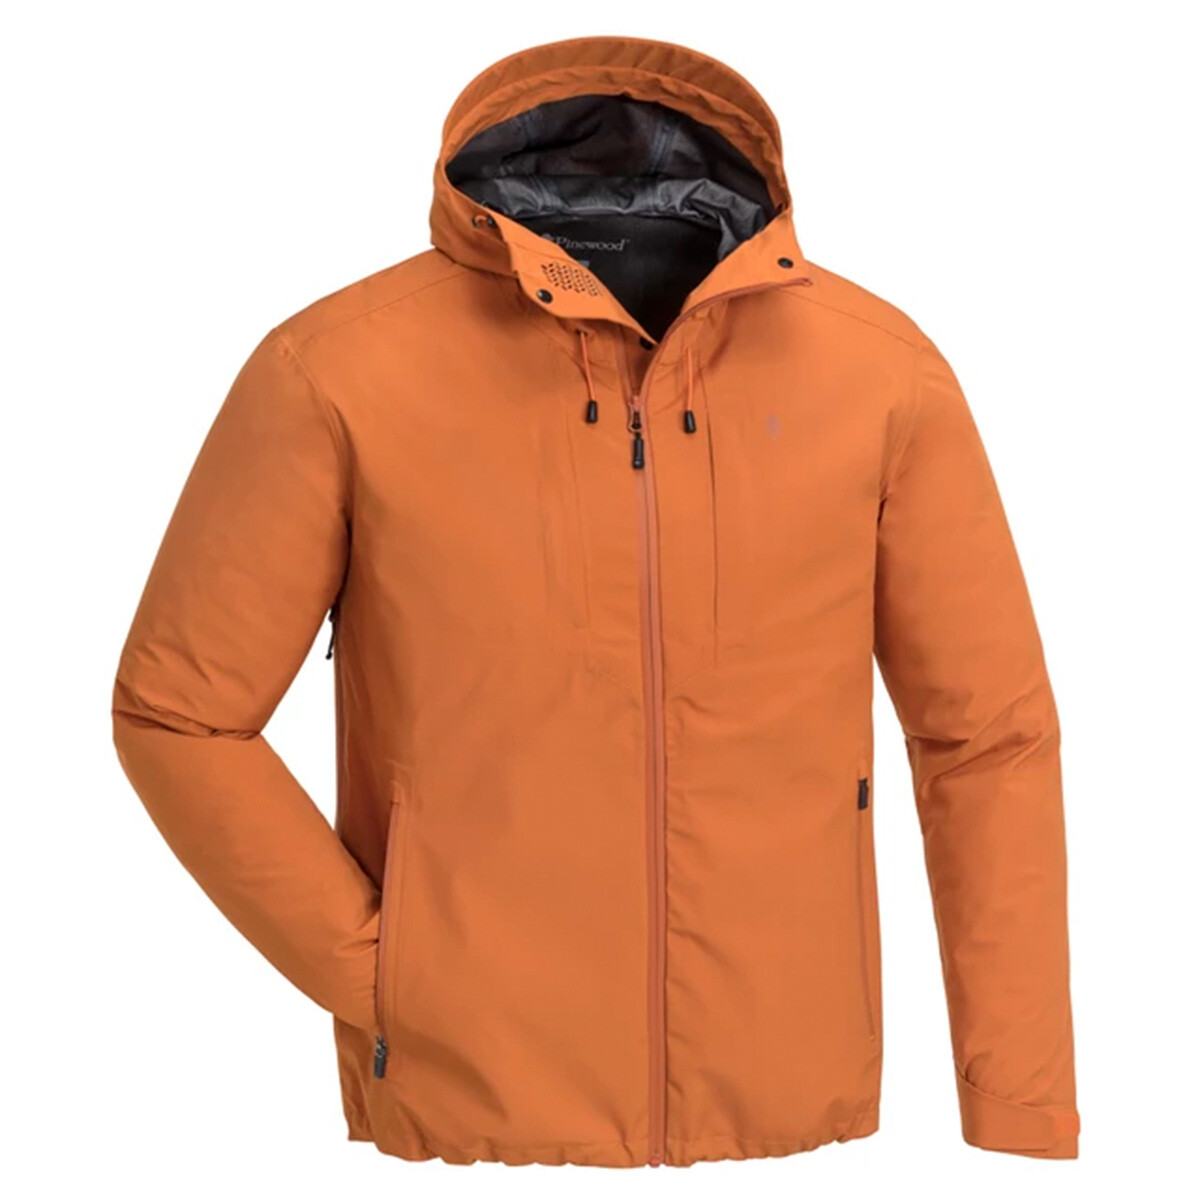 Se Pinewood Telluz jakke (Burned Orange, L) hos Specialbutikken